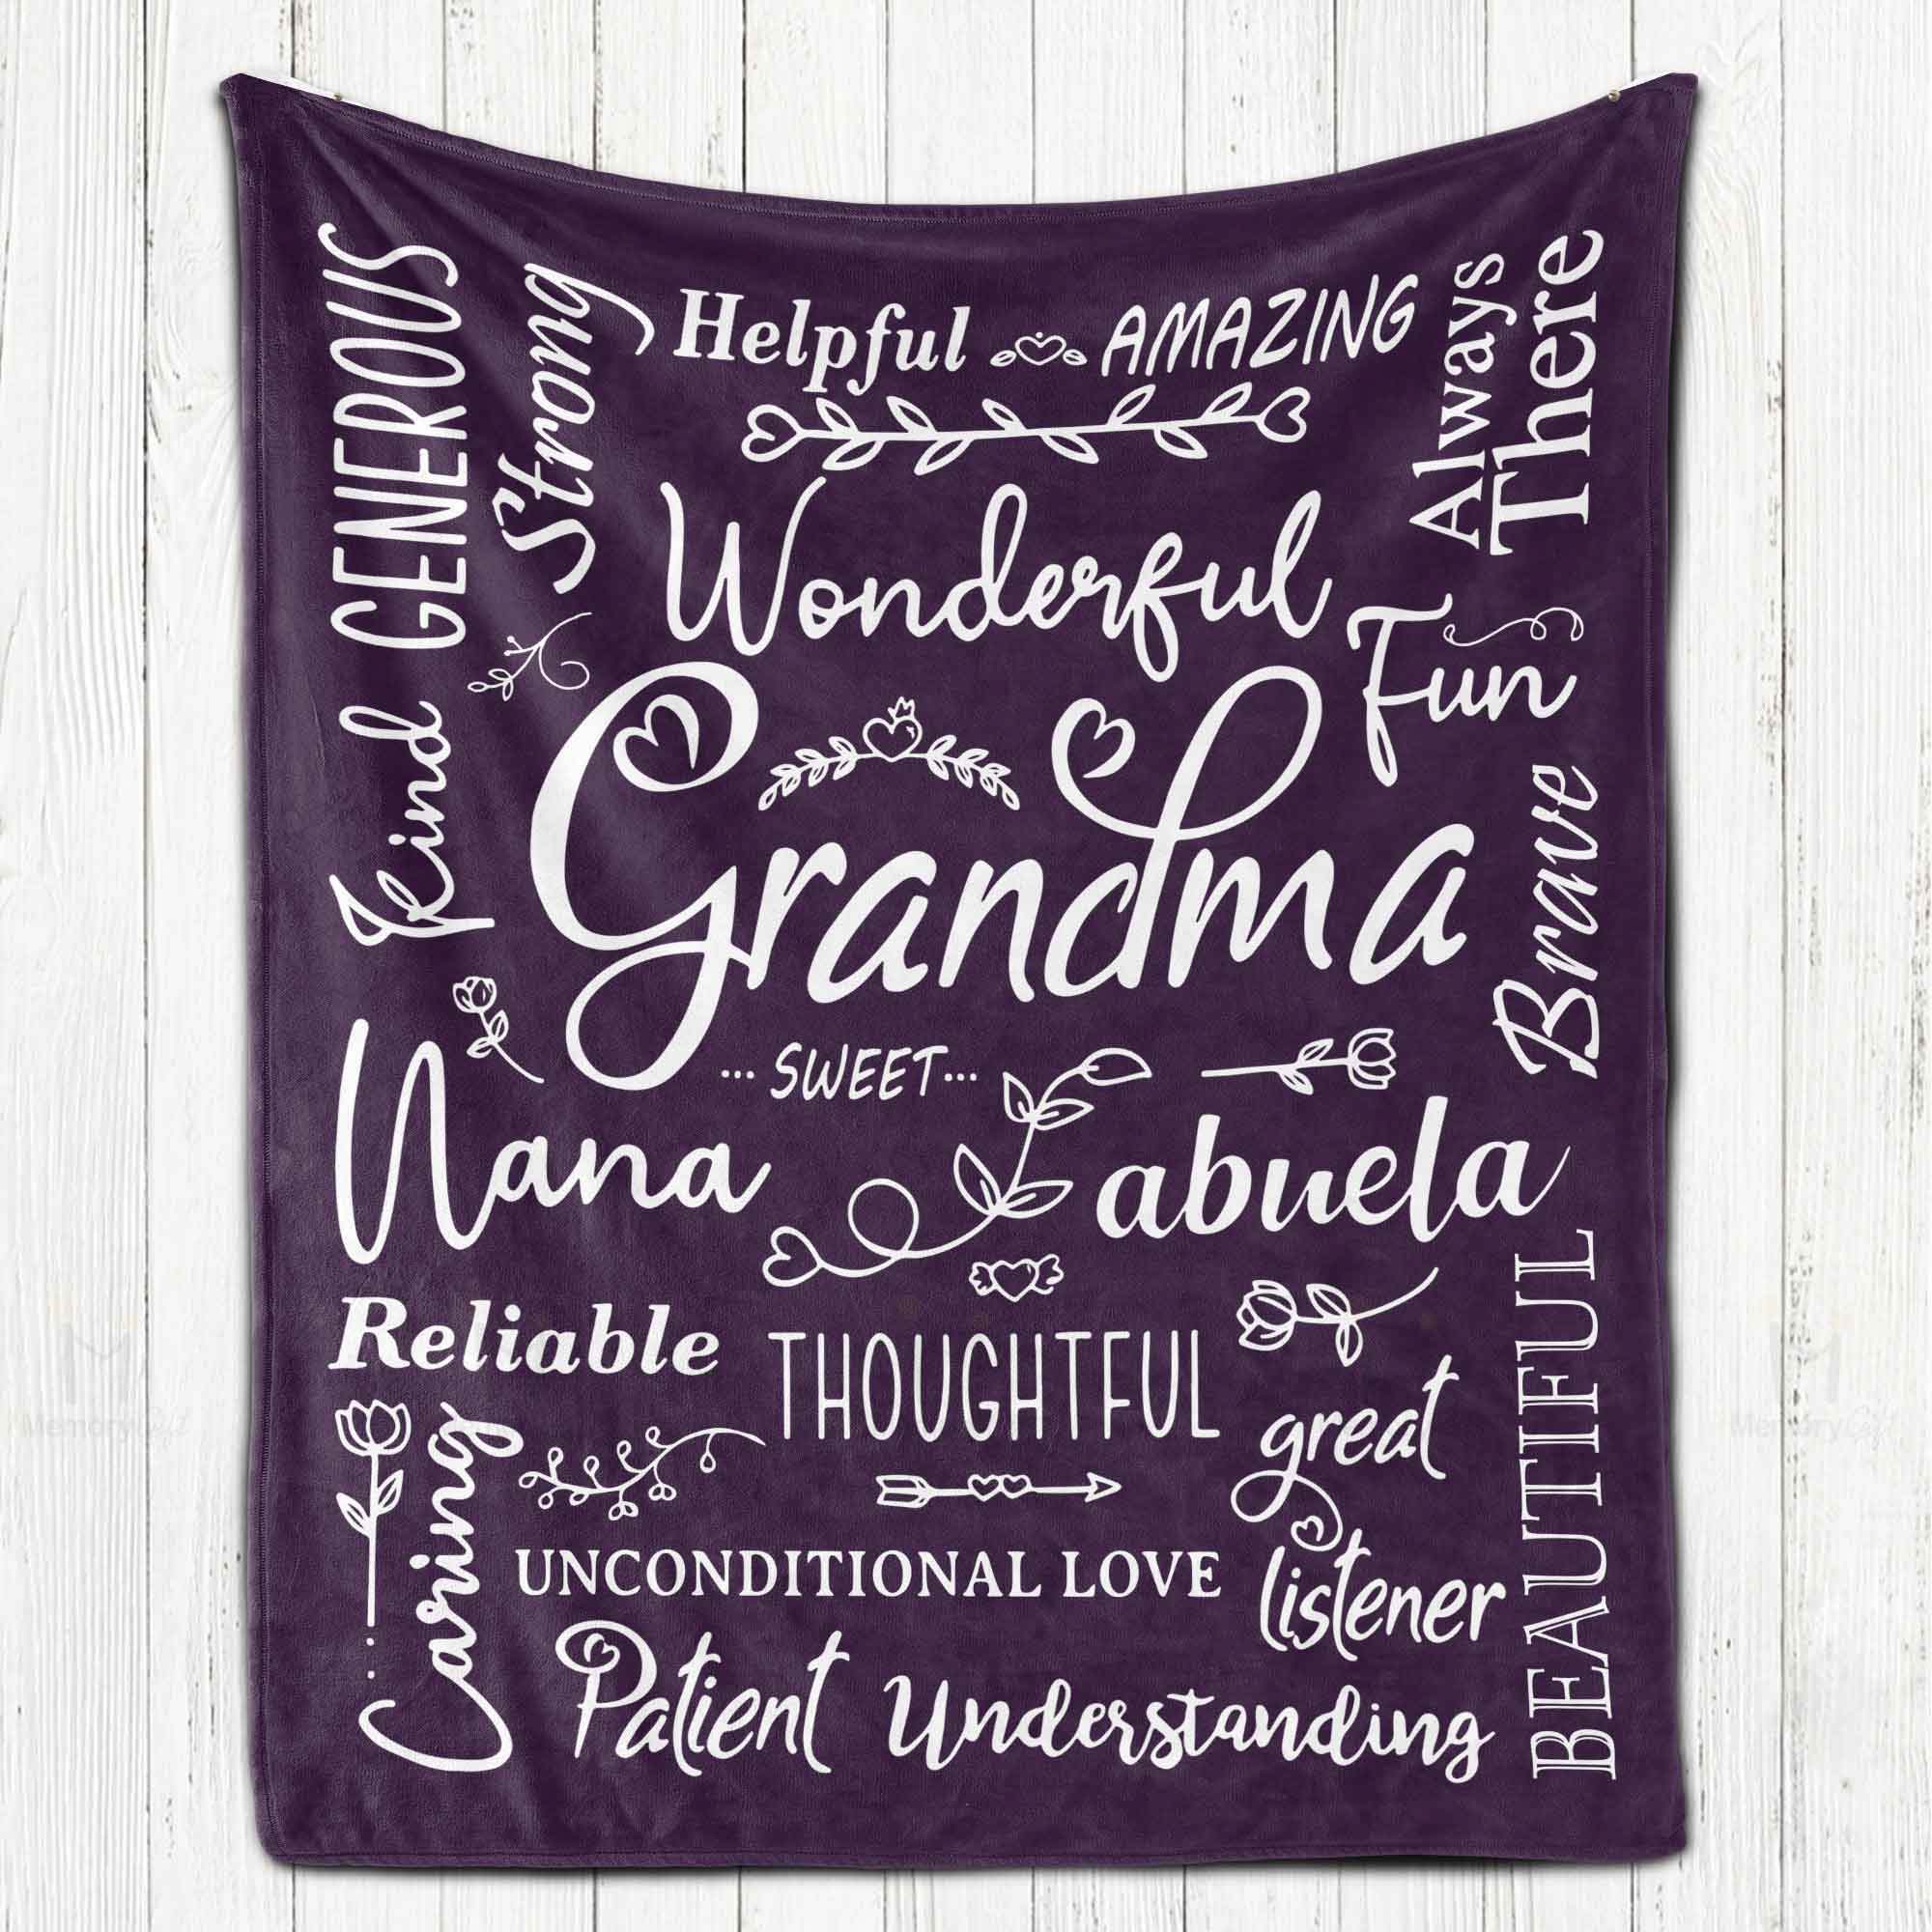 grandma blanket